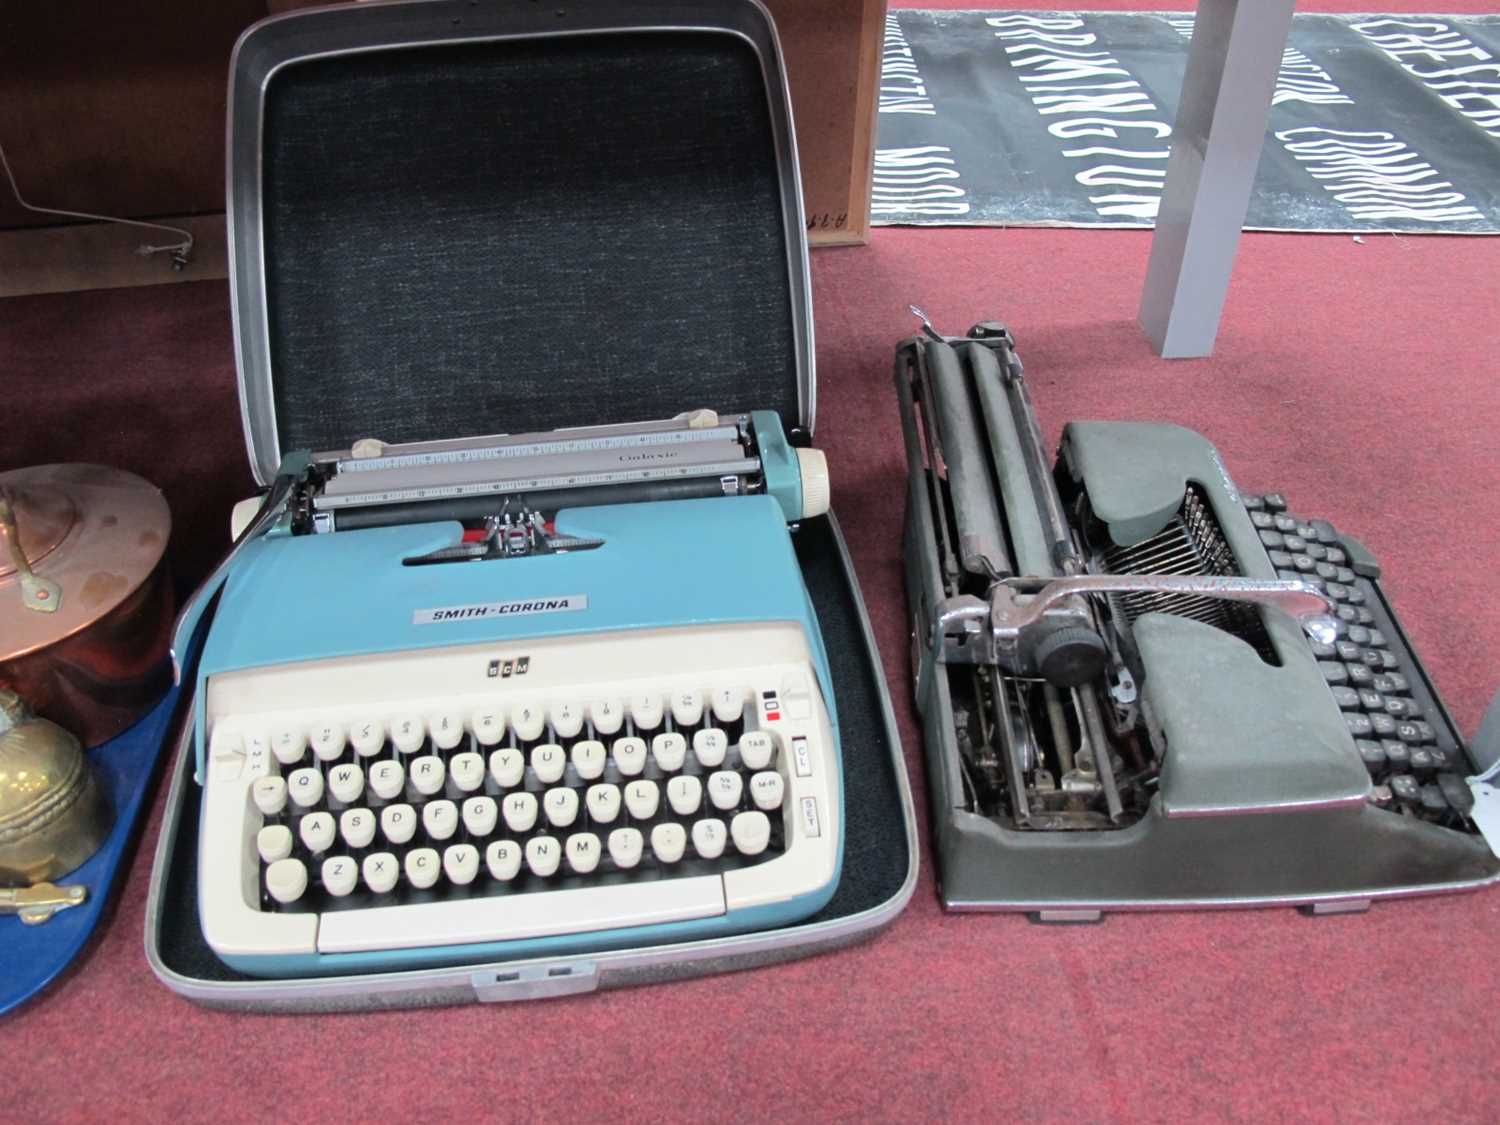 Olympia Typewriter, Smith Corona typewriter.